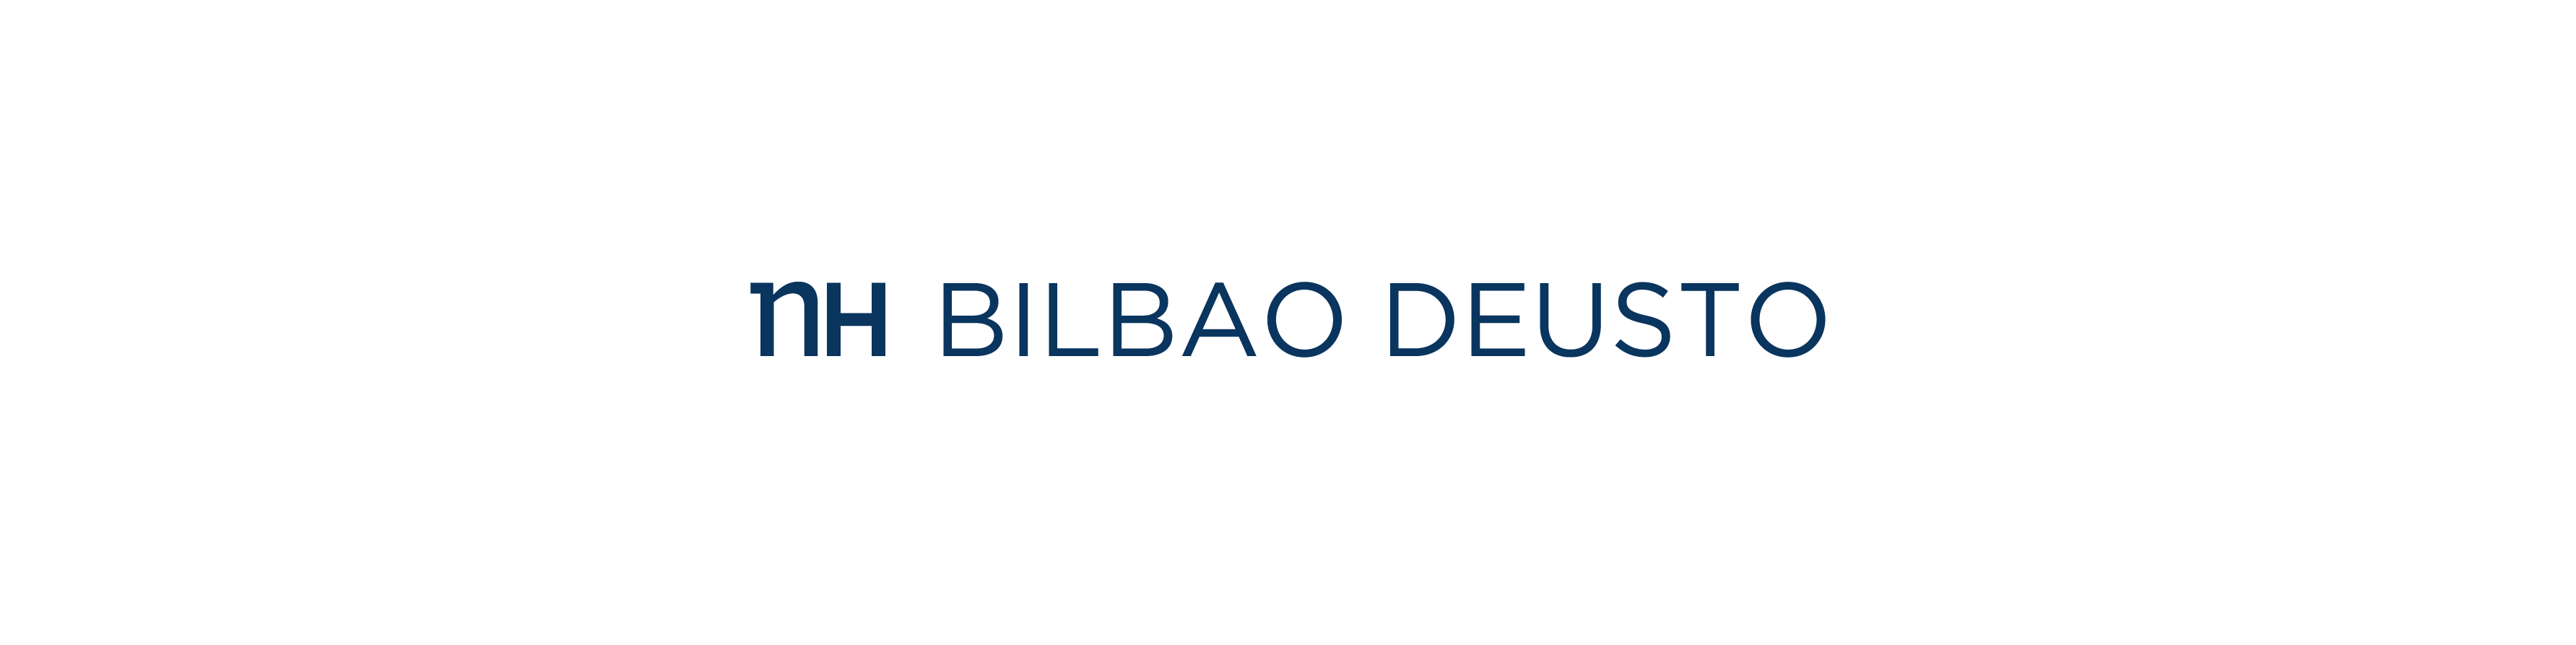 NH Bilbao Deusto